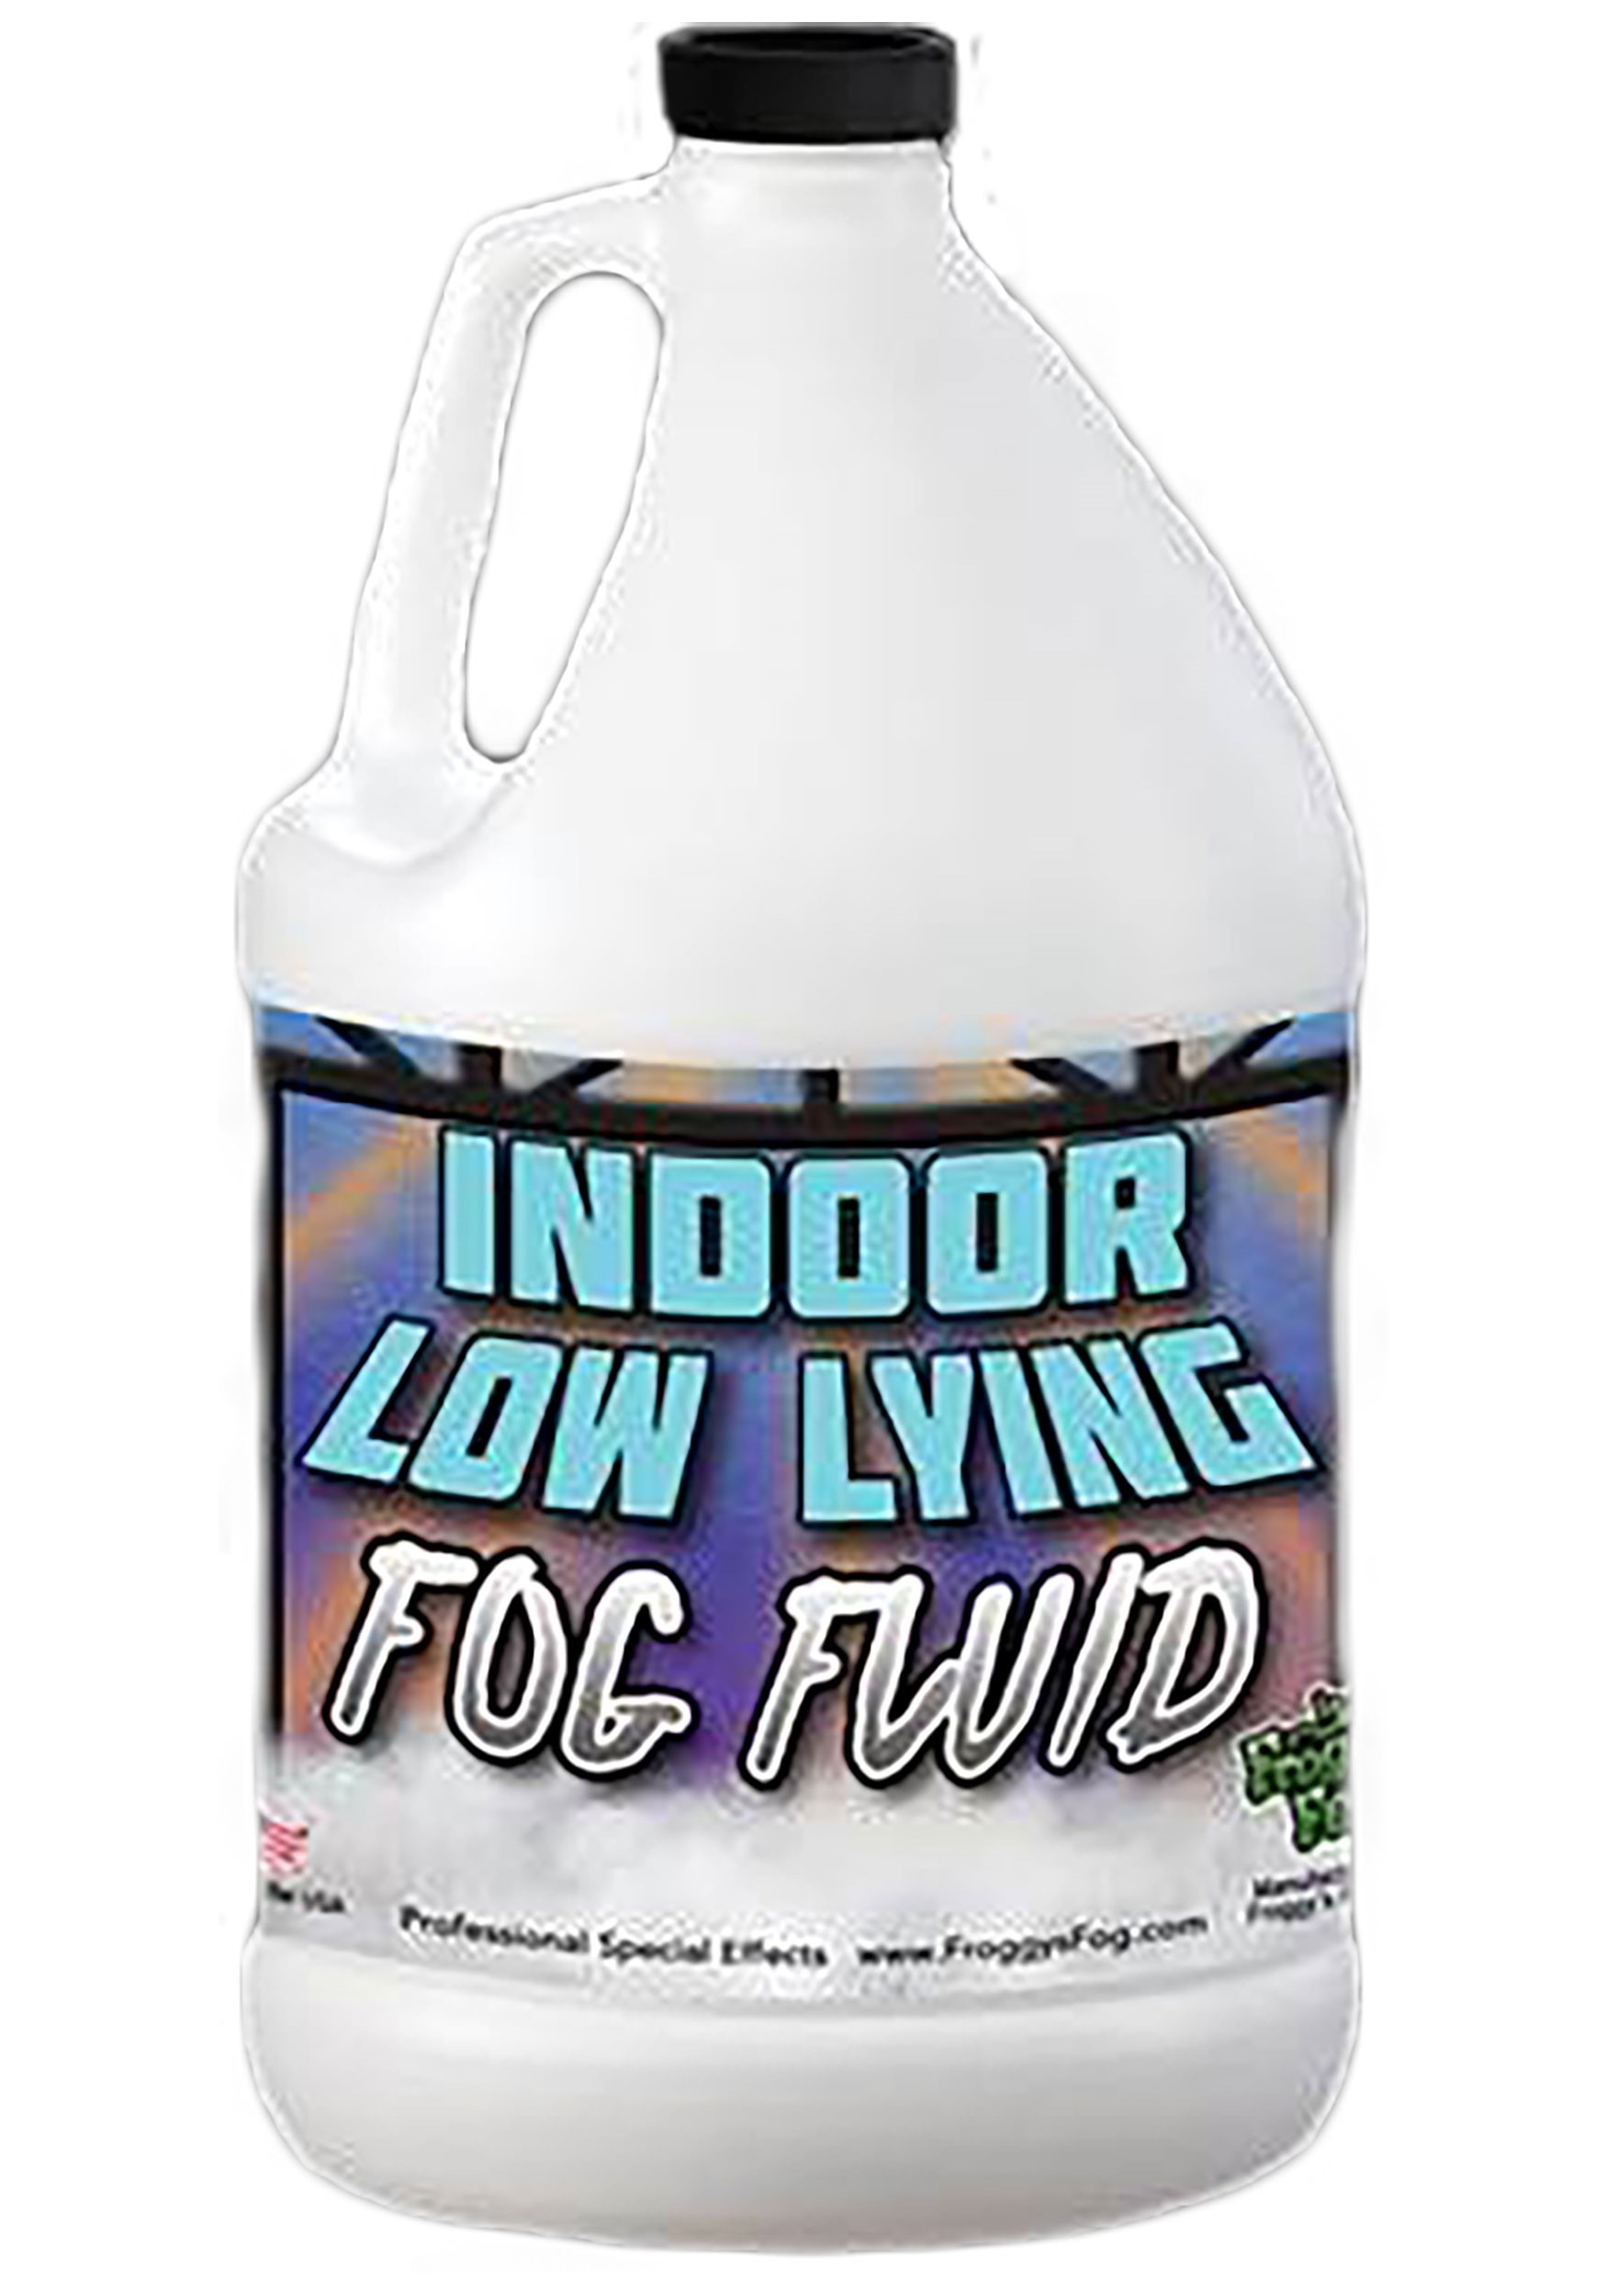 Indoor Low Lying Froggys Fog Fluid